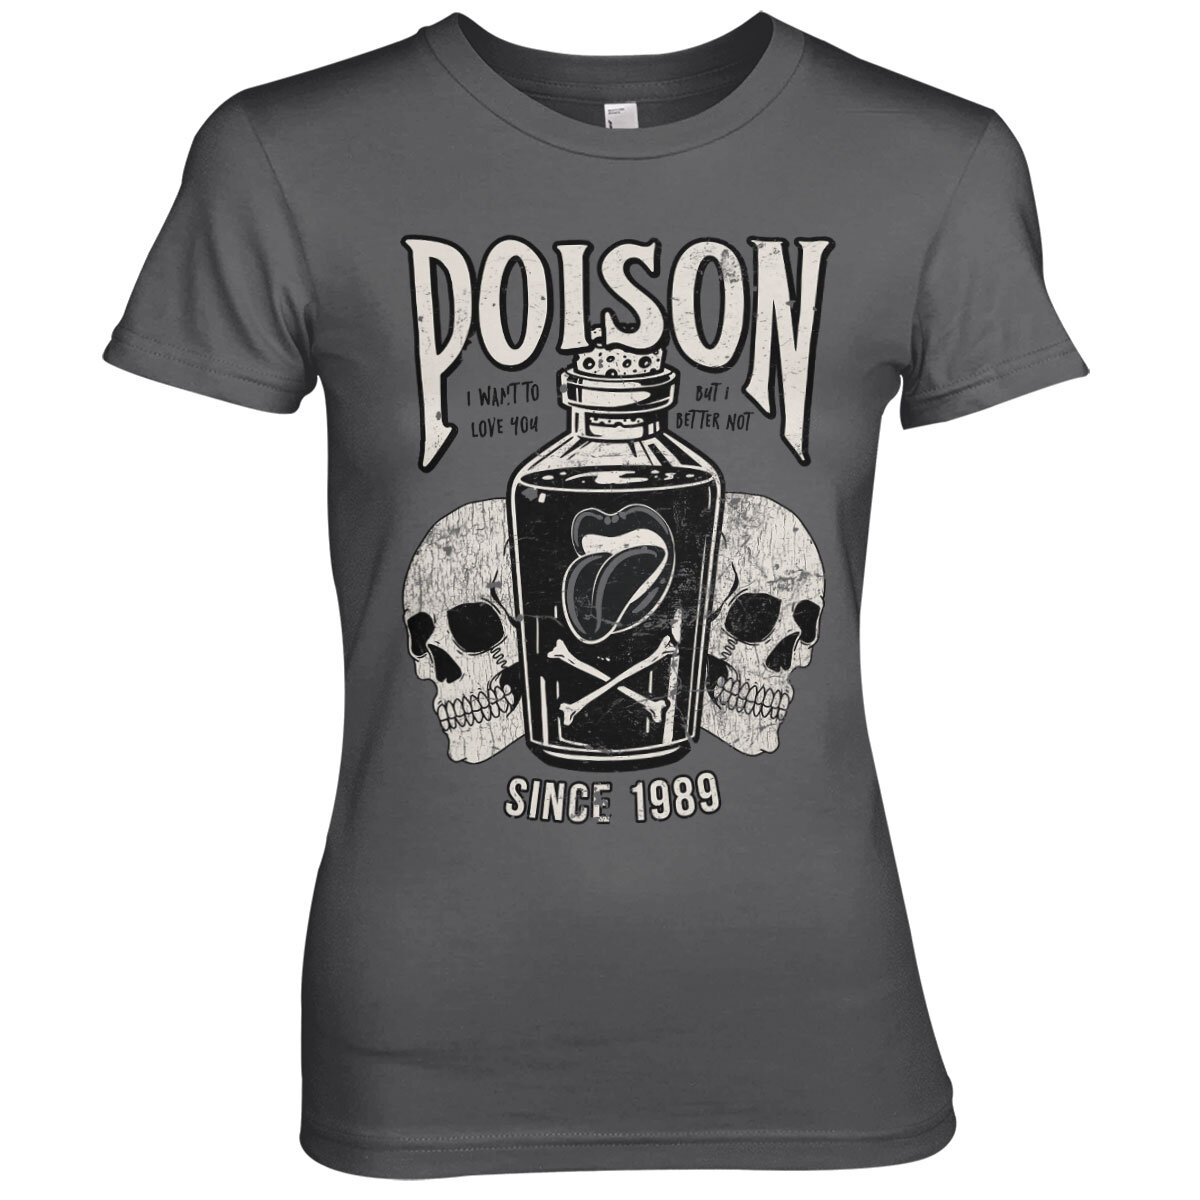 Poison Girly Tee